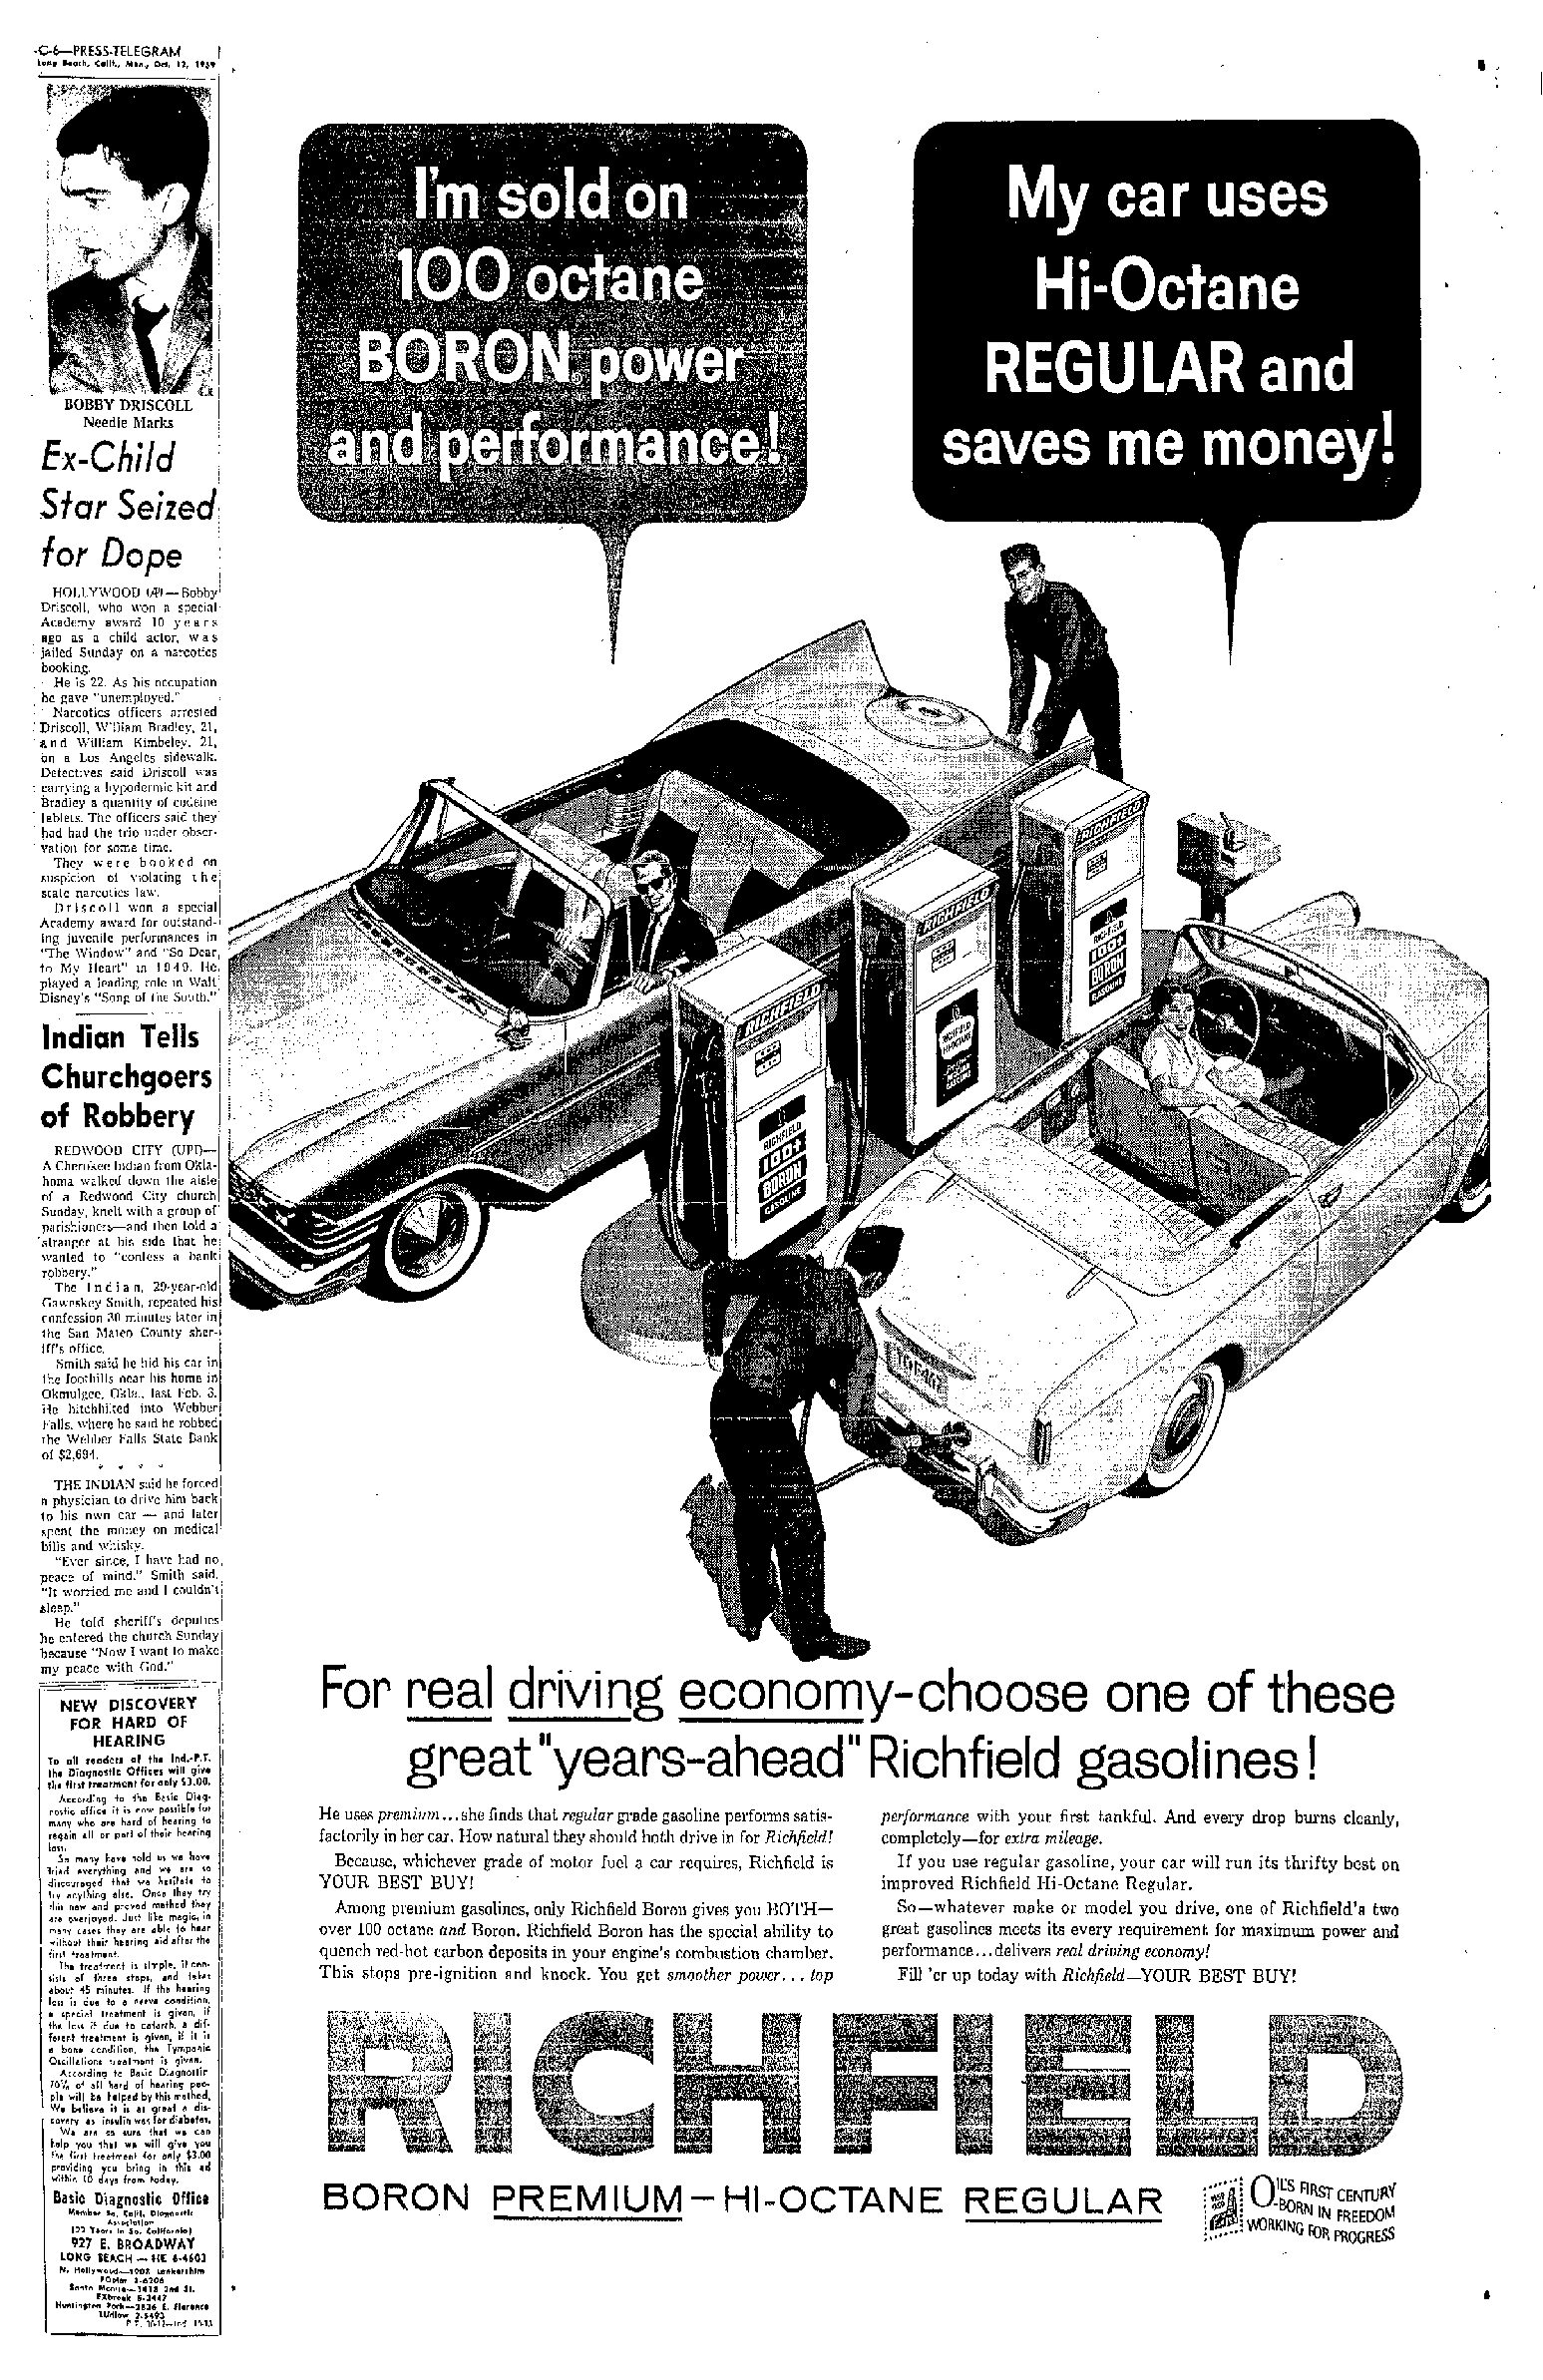 1959 narcotics arrest | Bobby Driscoll